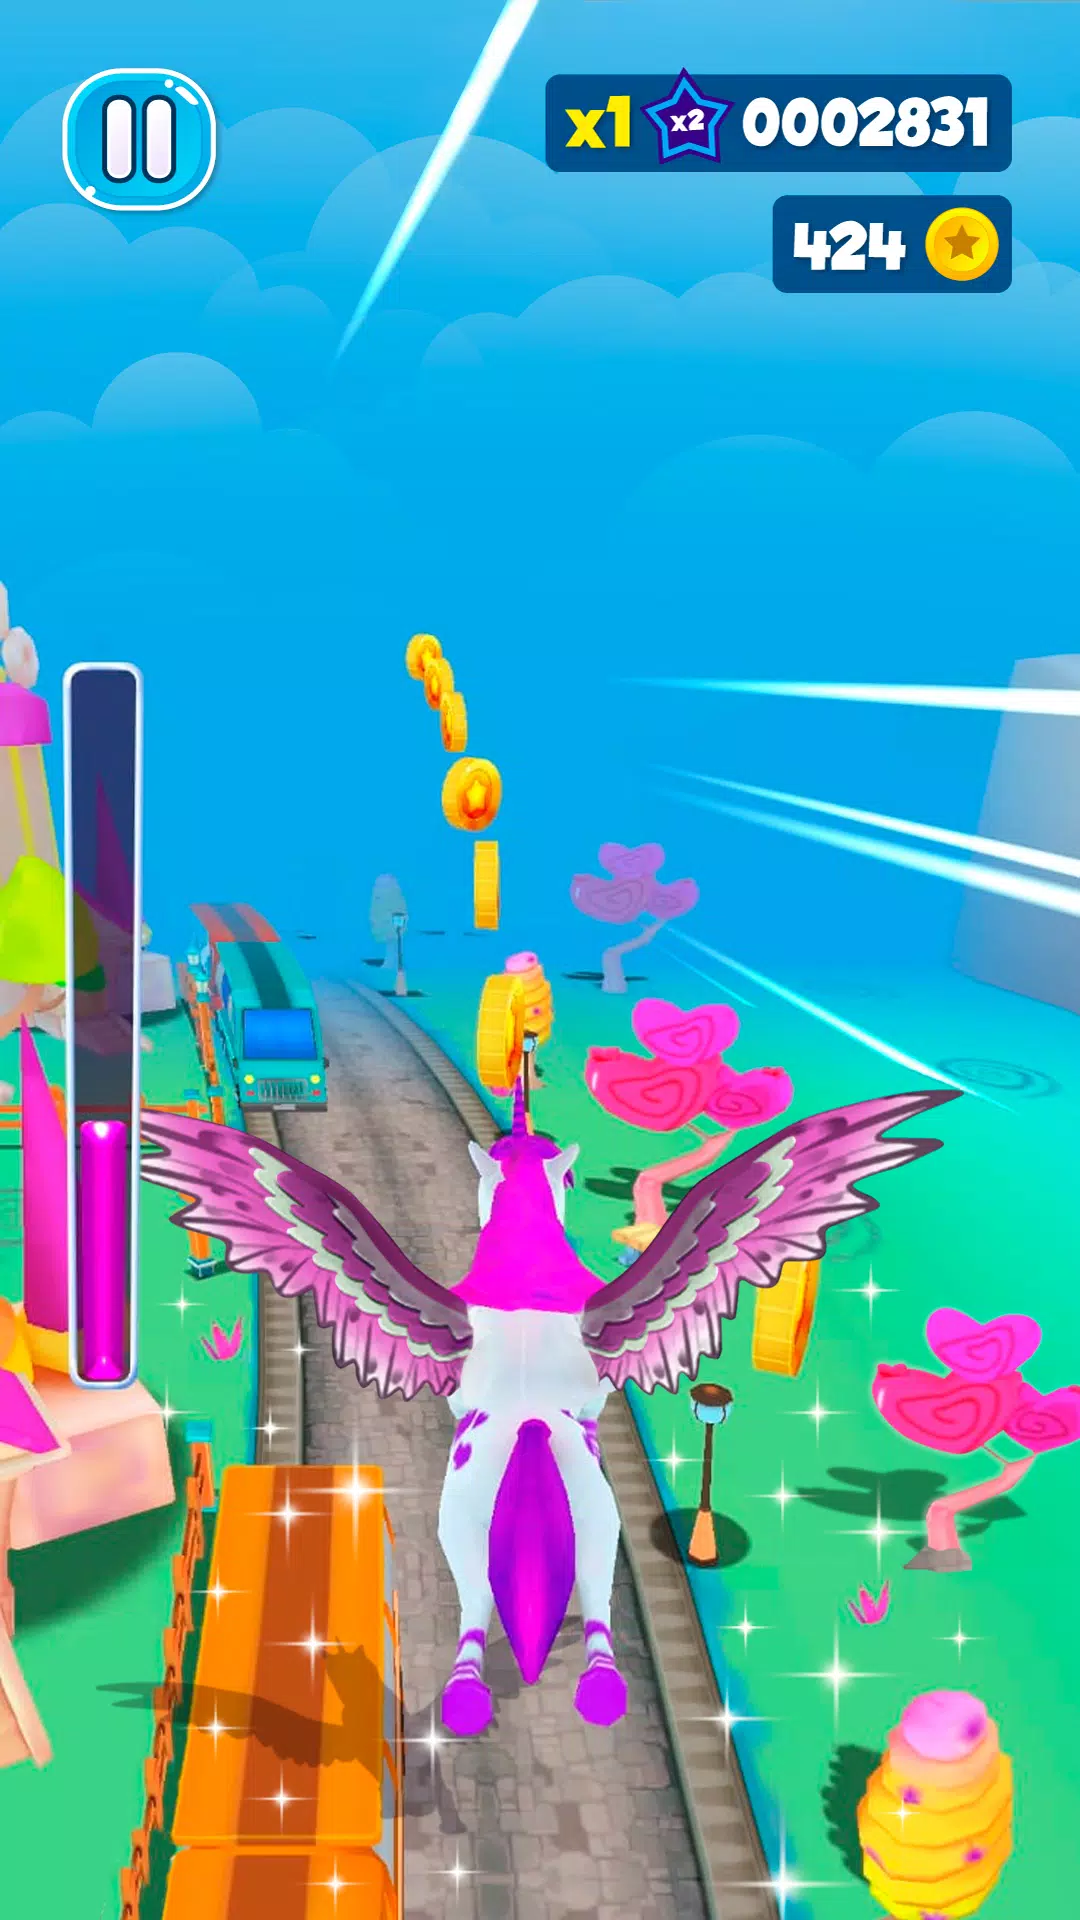 Baixar UNICORN - Jogos de colorir 2.17 Android - Download APK Grátis